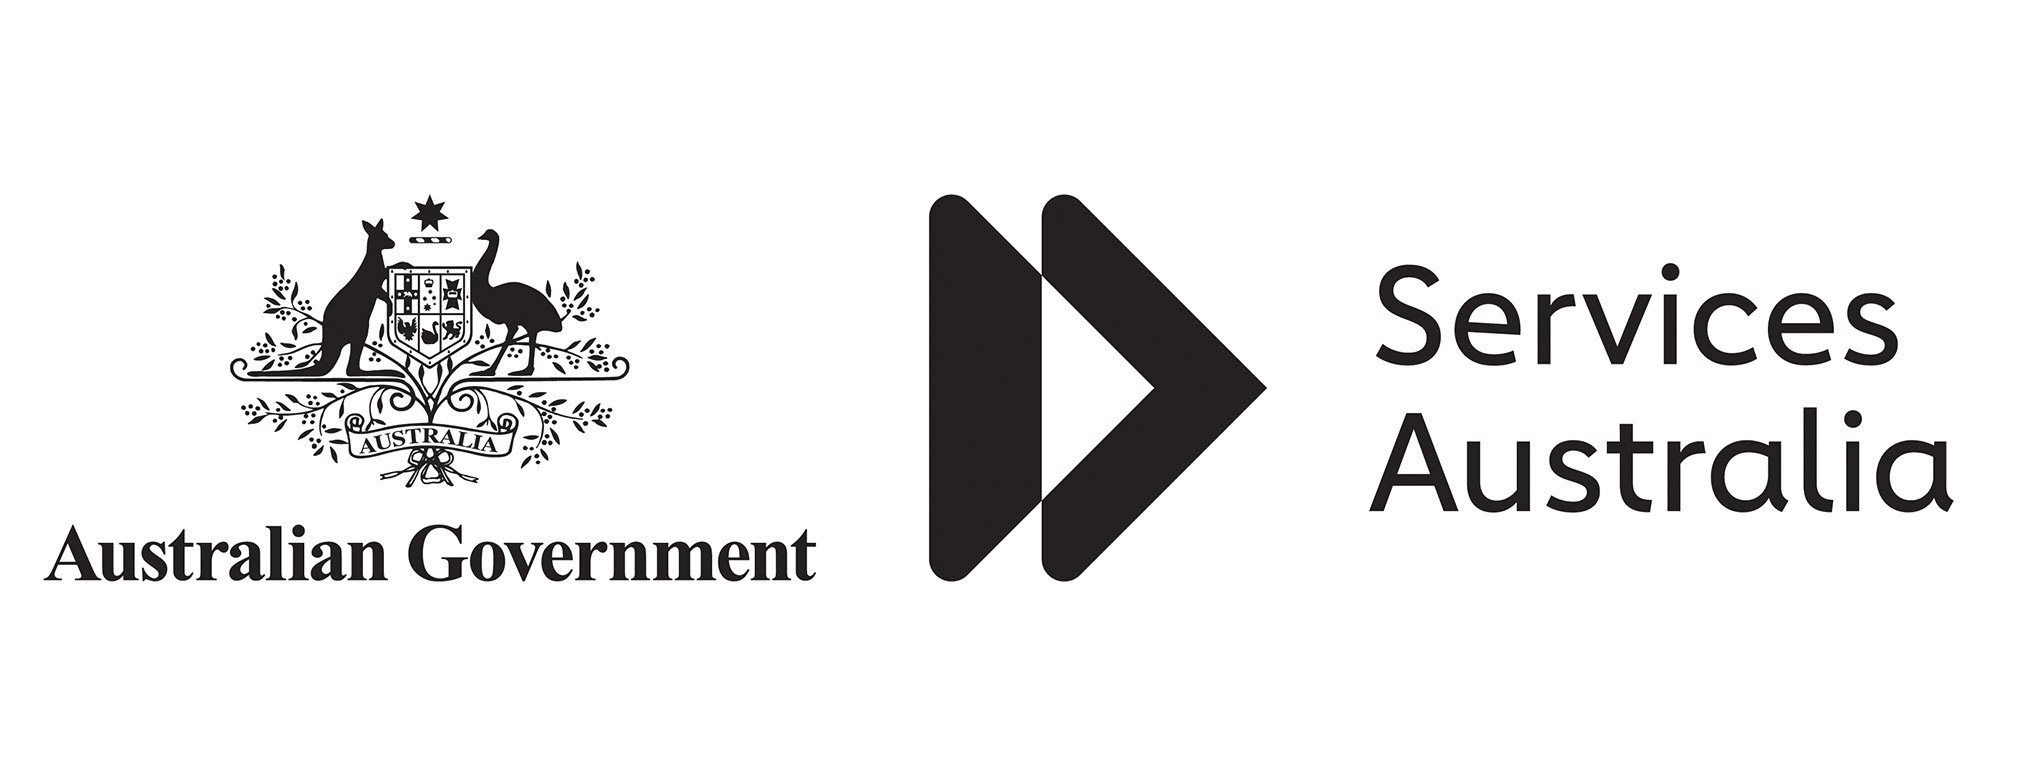 Australian Government and Services Australia logos